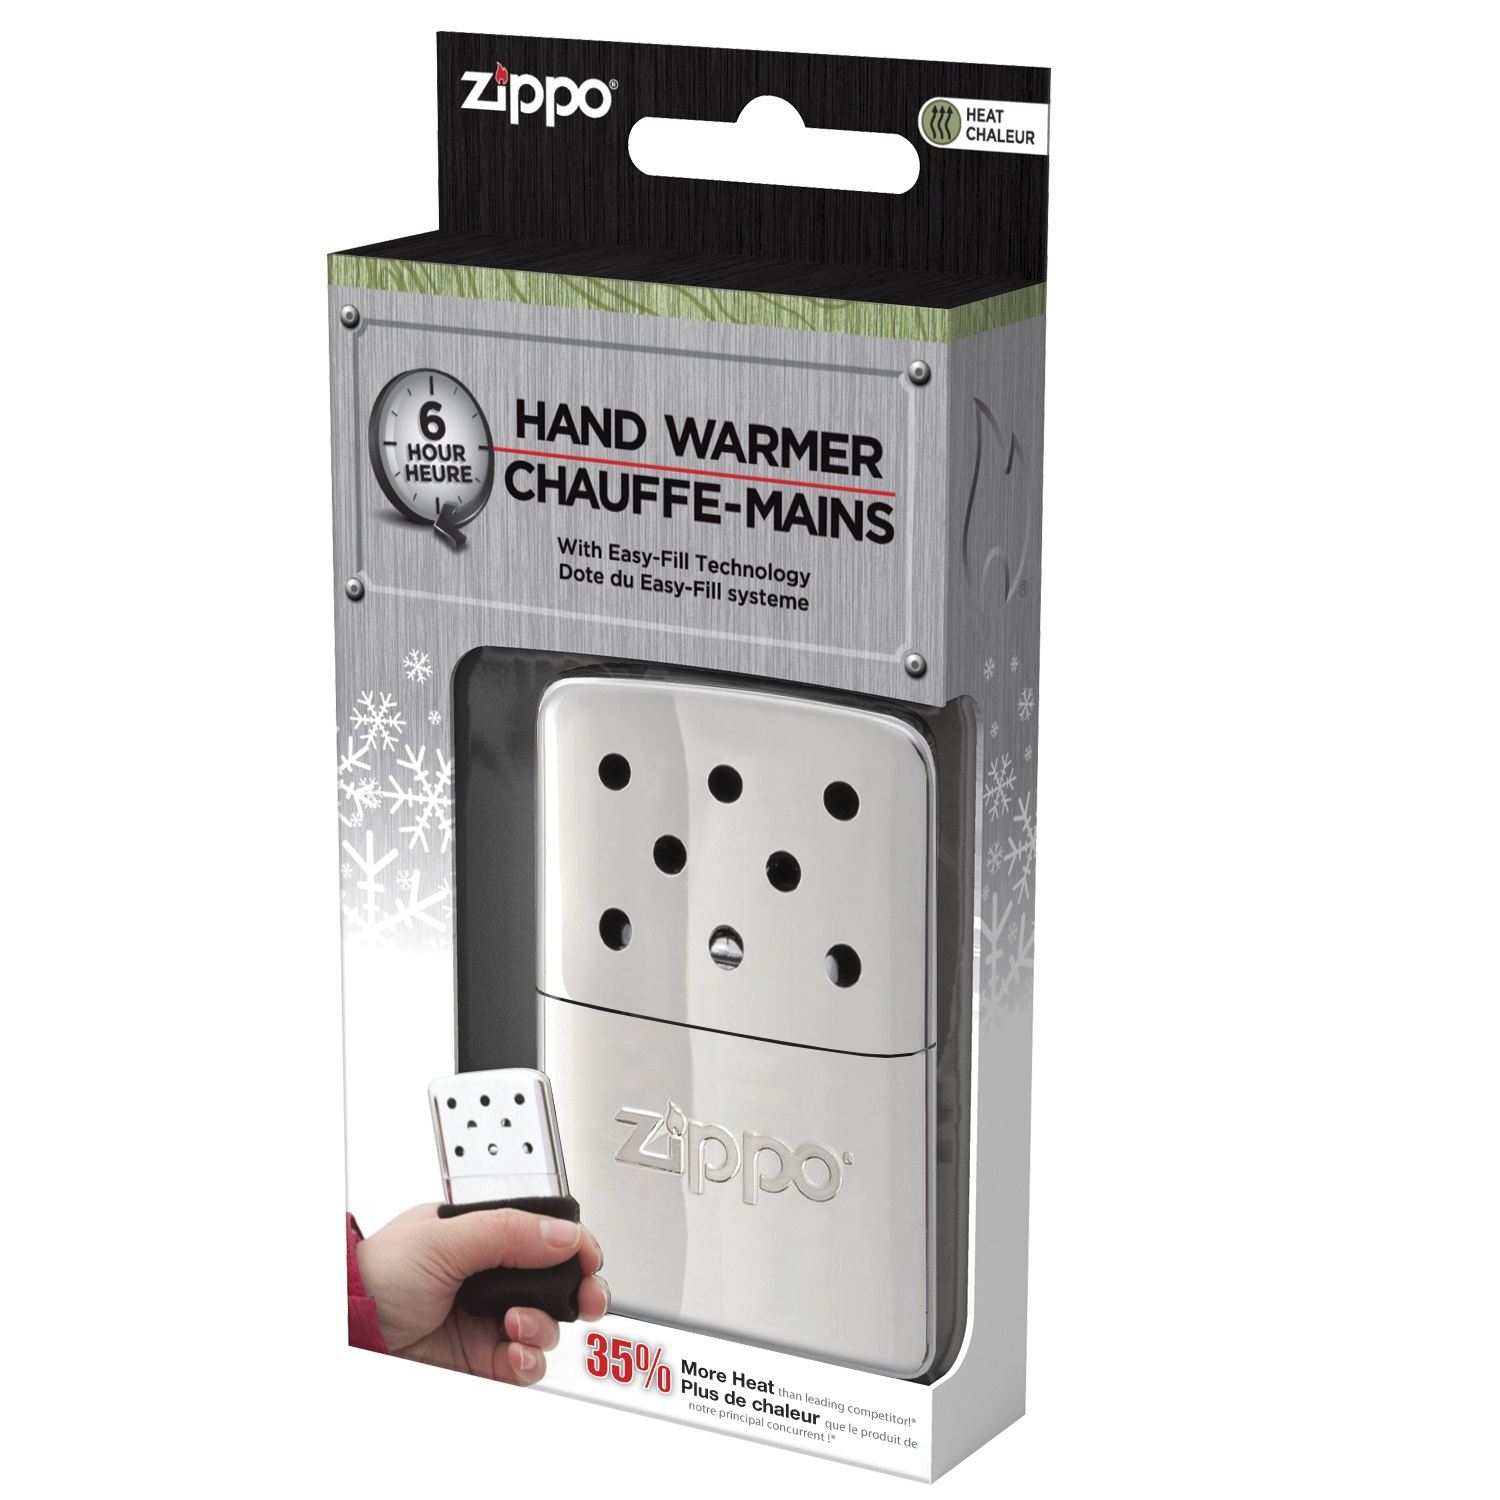 Zippo Hand Warmer 6 Hour, High Polish Chrome